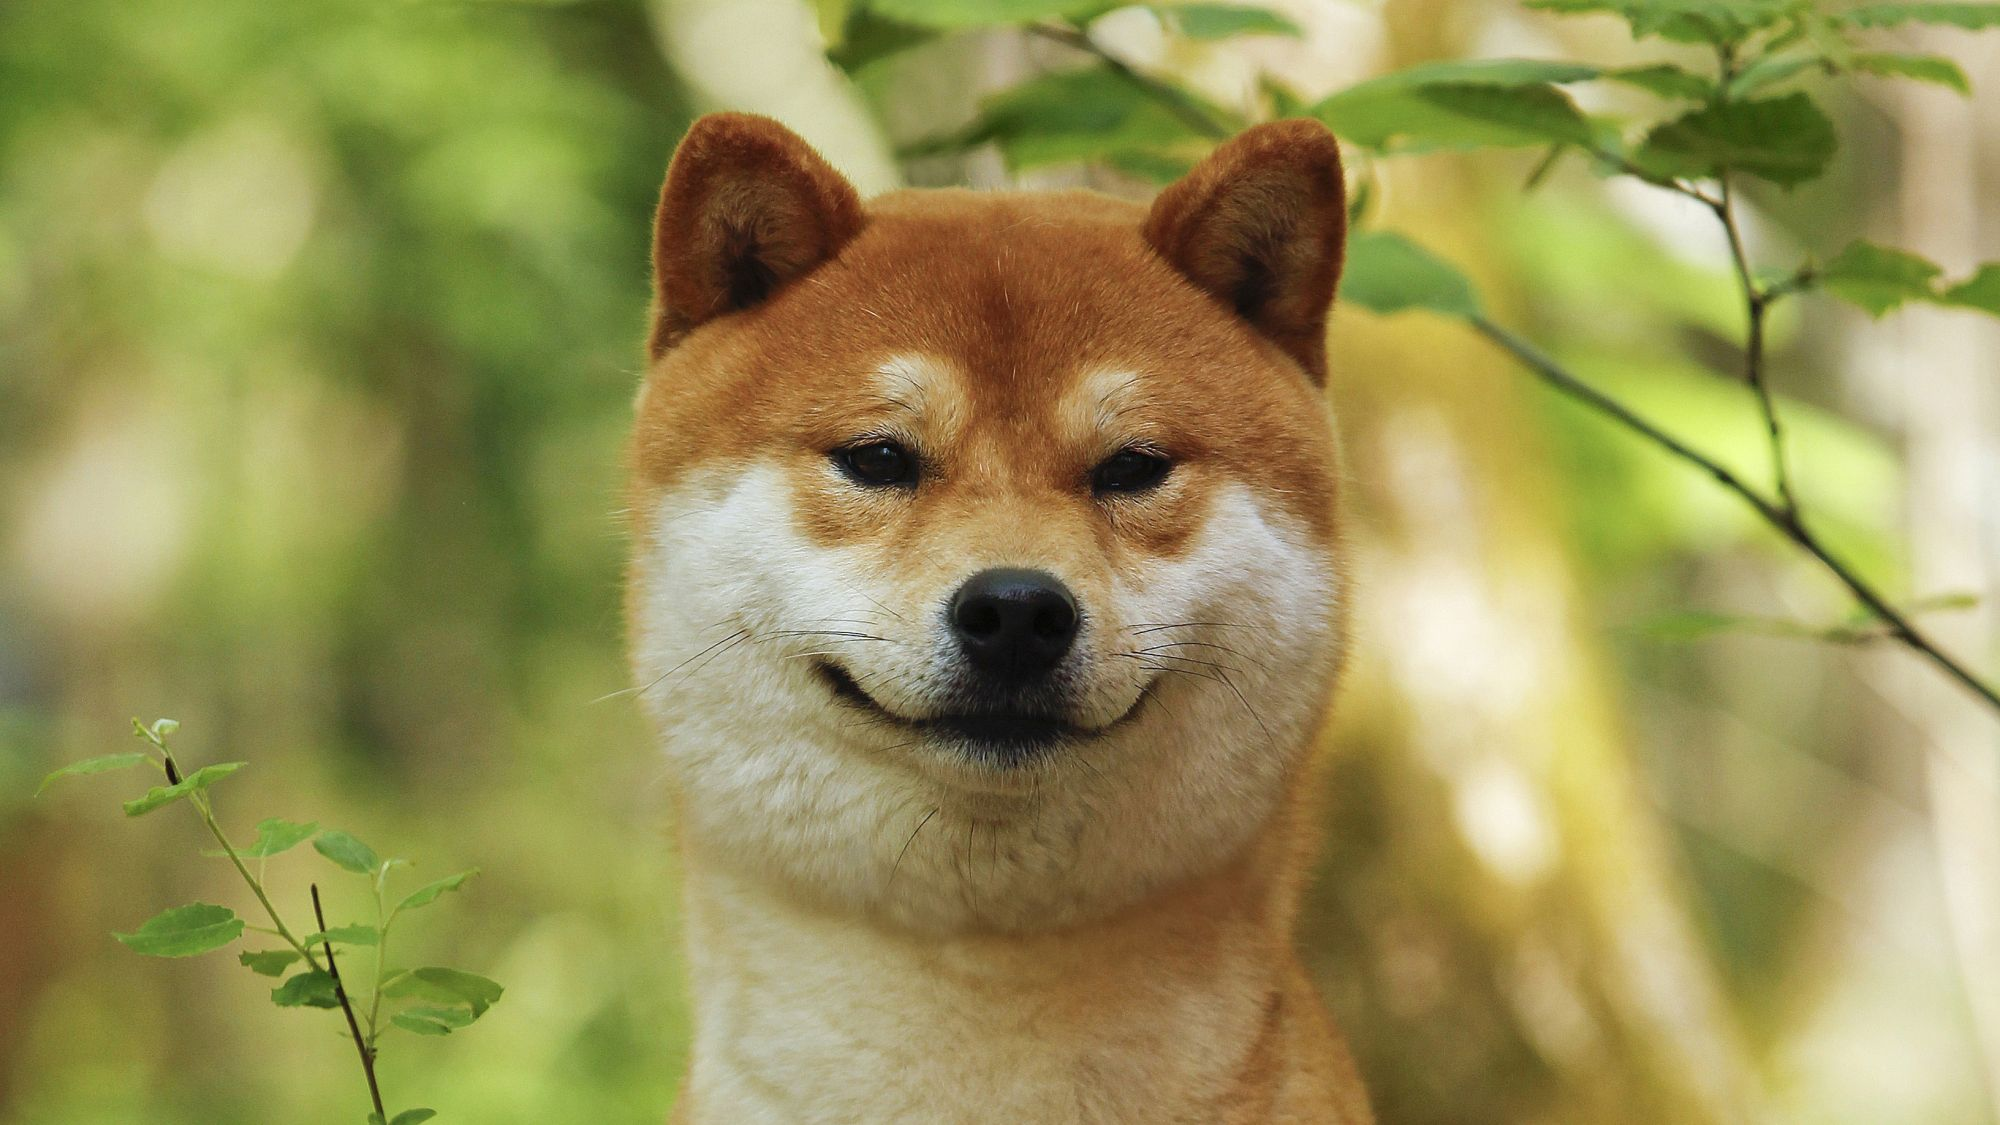 close-up of a Shiba dog looking into the camera